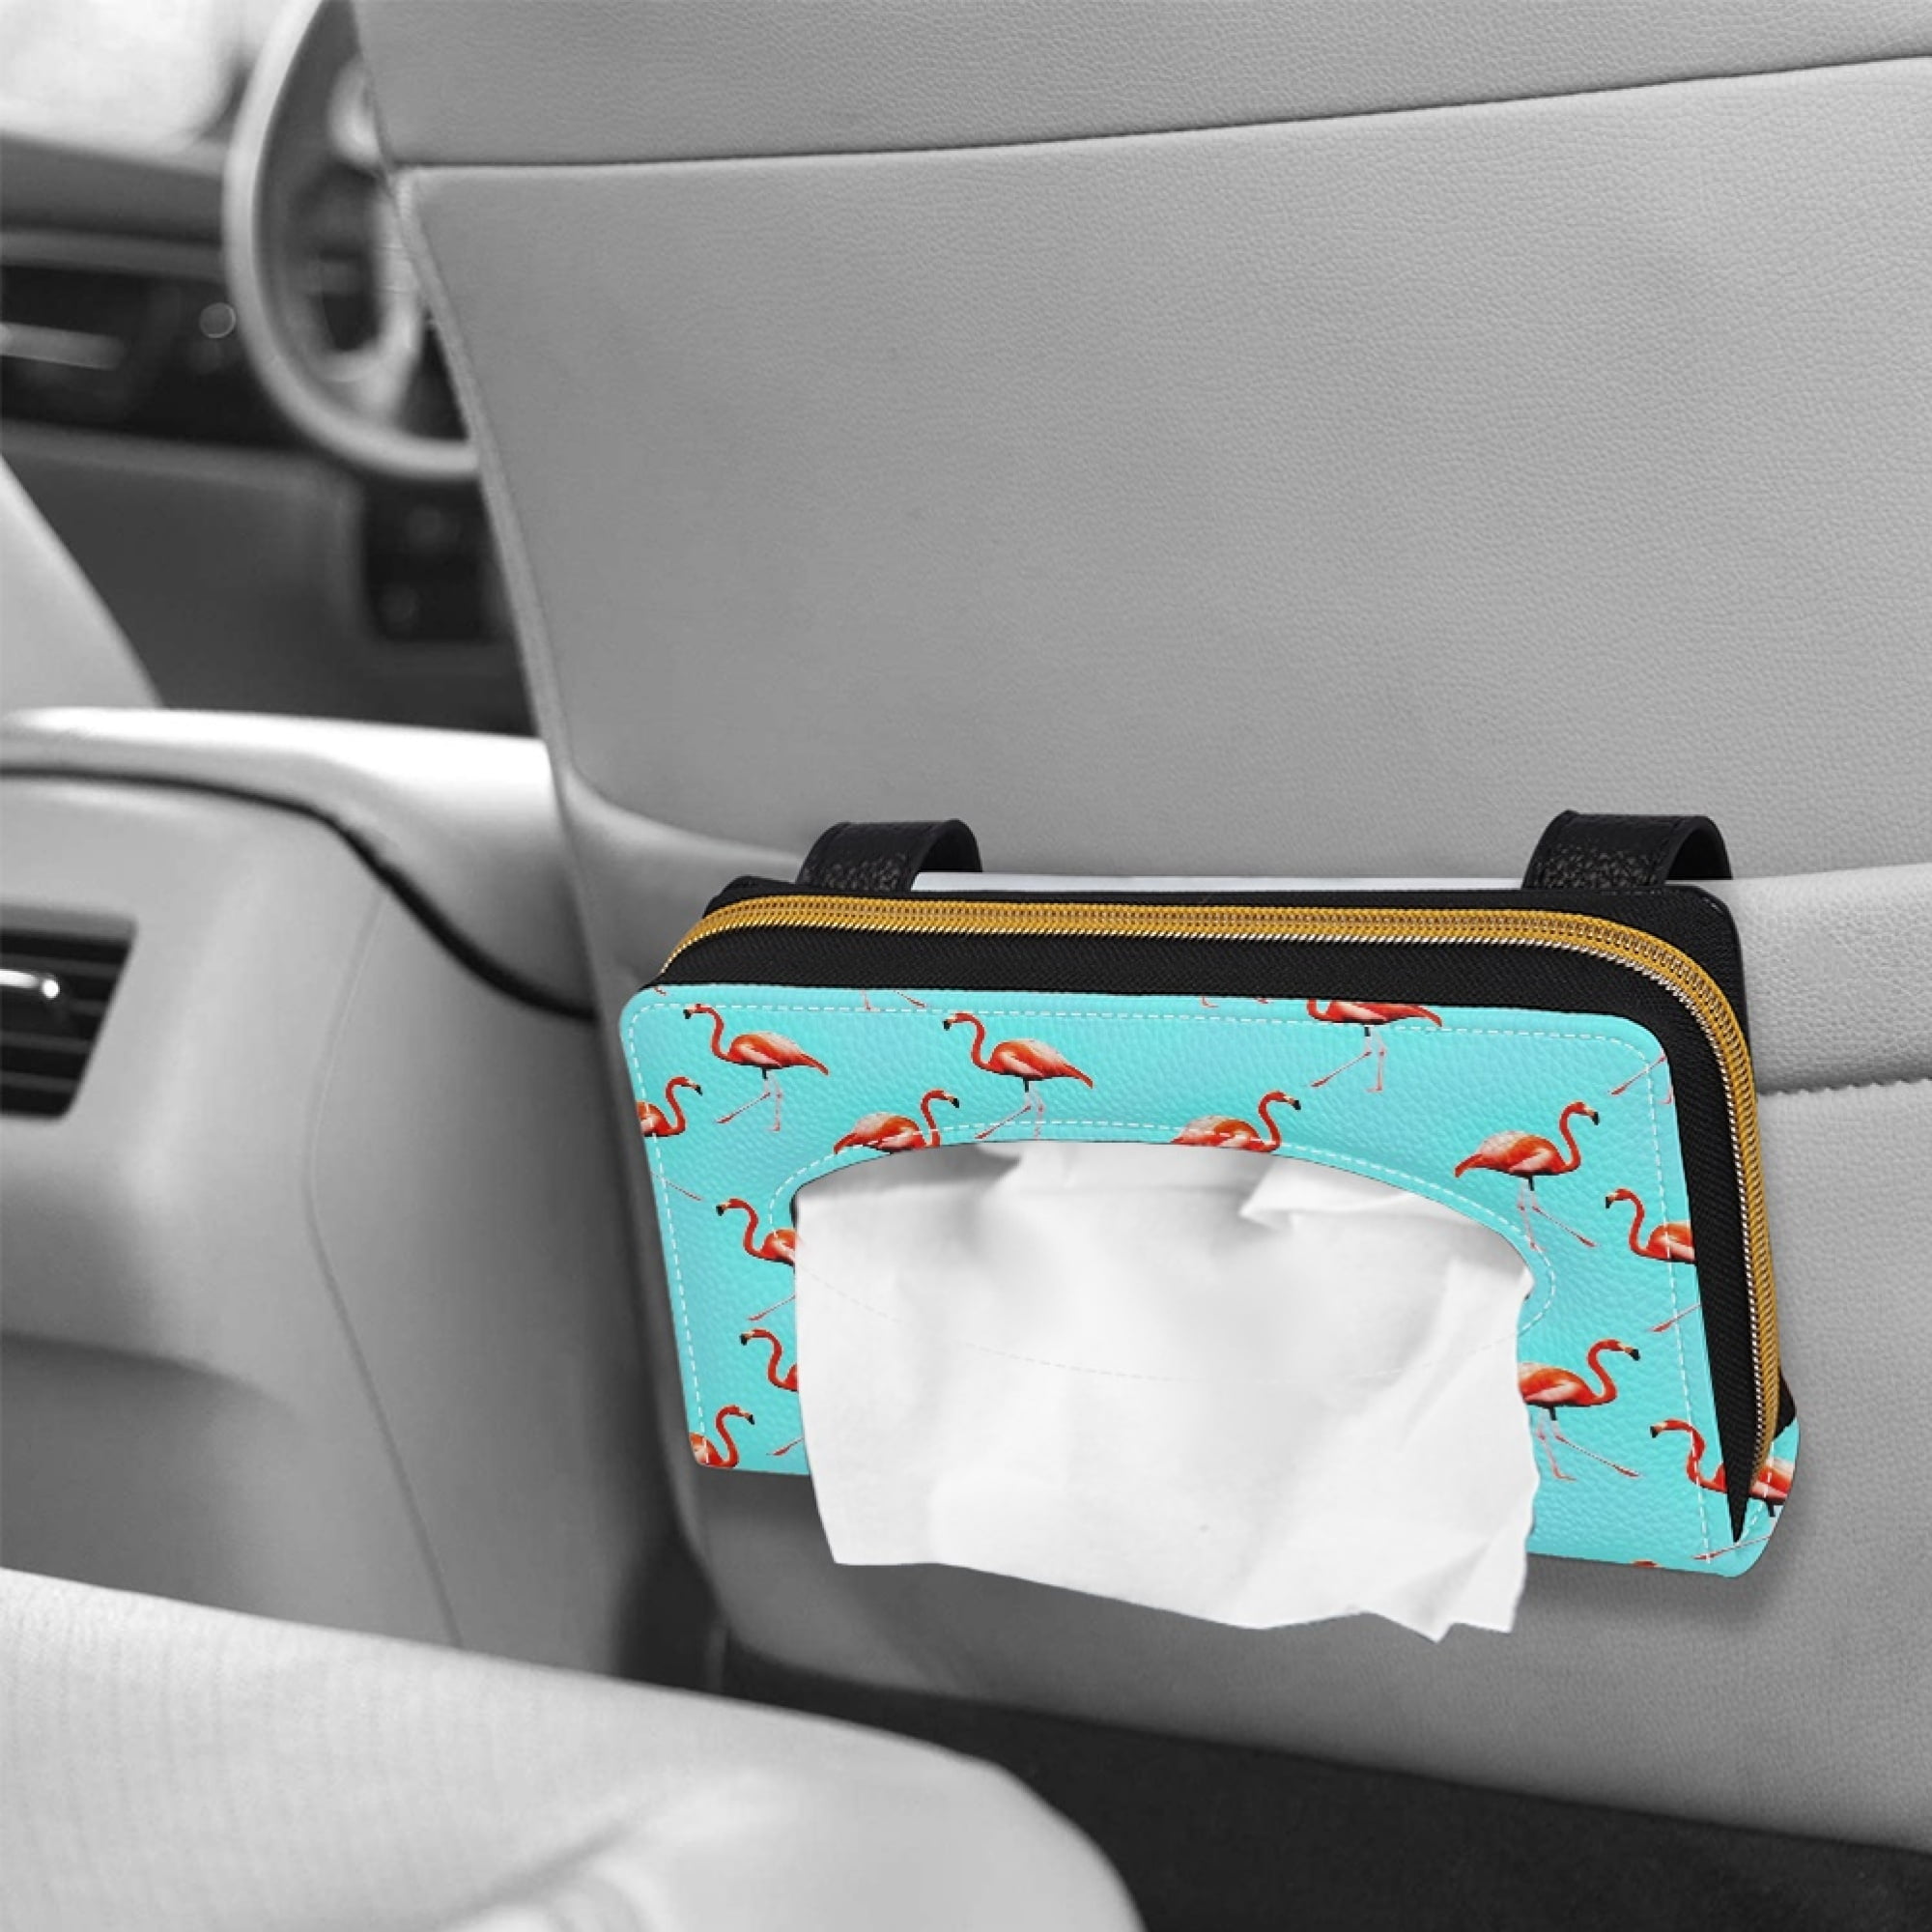 Original design of multifunctional car tissue box Car Sun Visor Tissue Box  Holder Auto Interior Storage Mask Storage Box Decorat